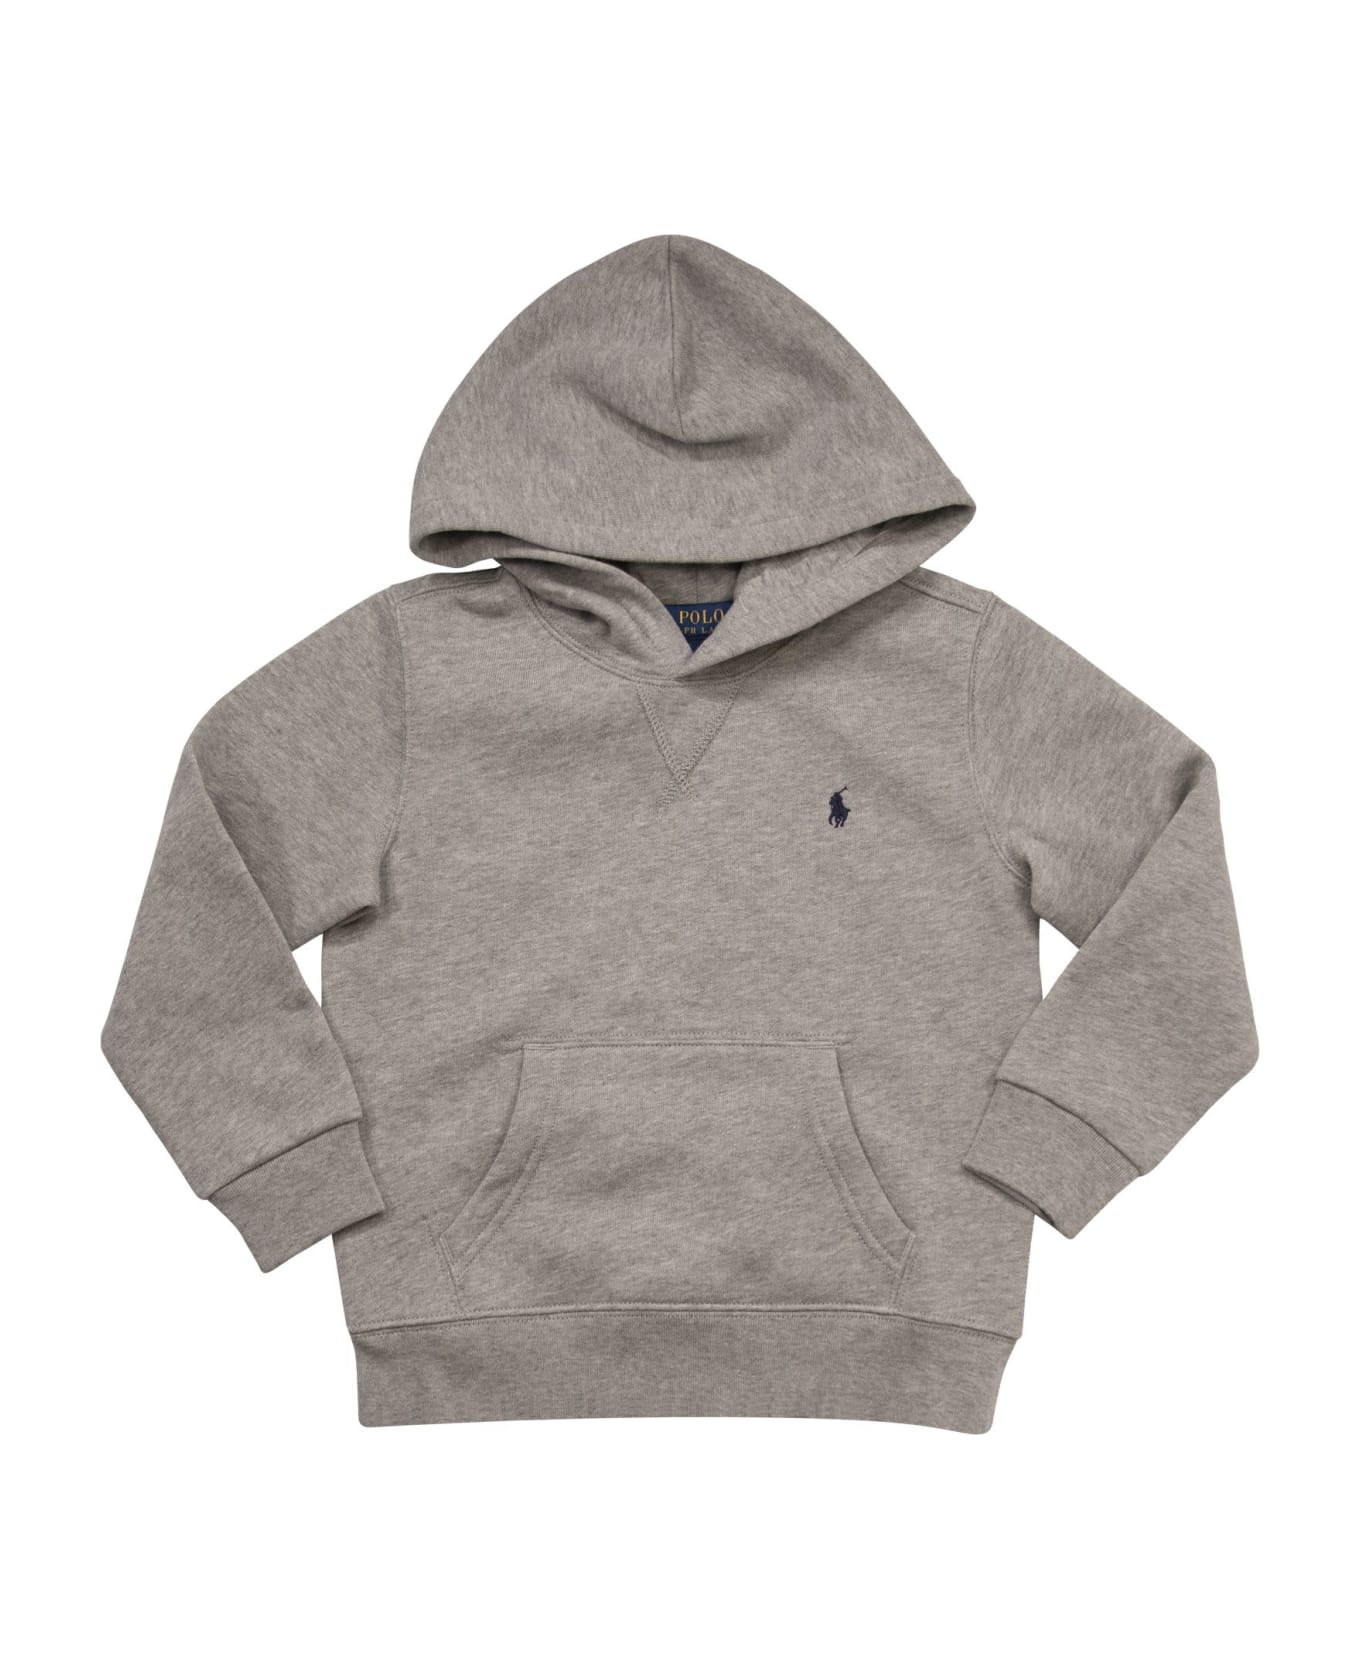 Polo Ralph Lauren Hooded Sweatshirt - Grey